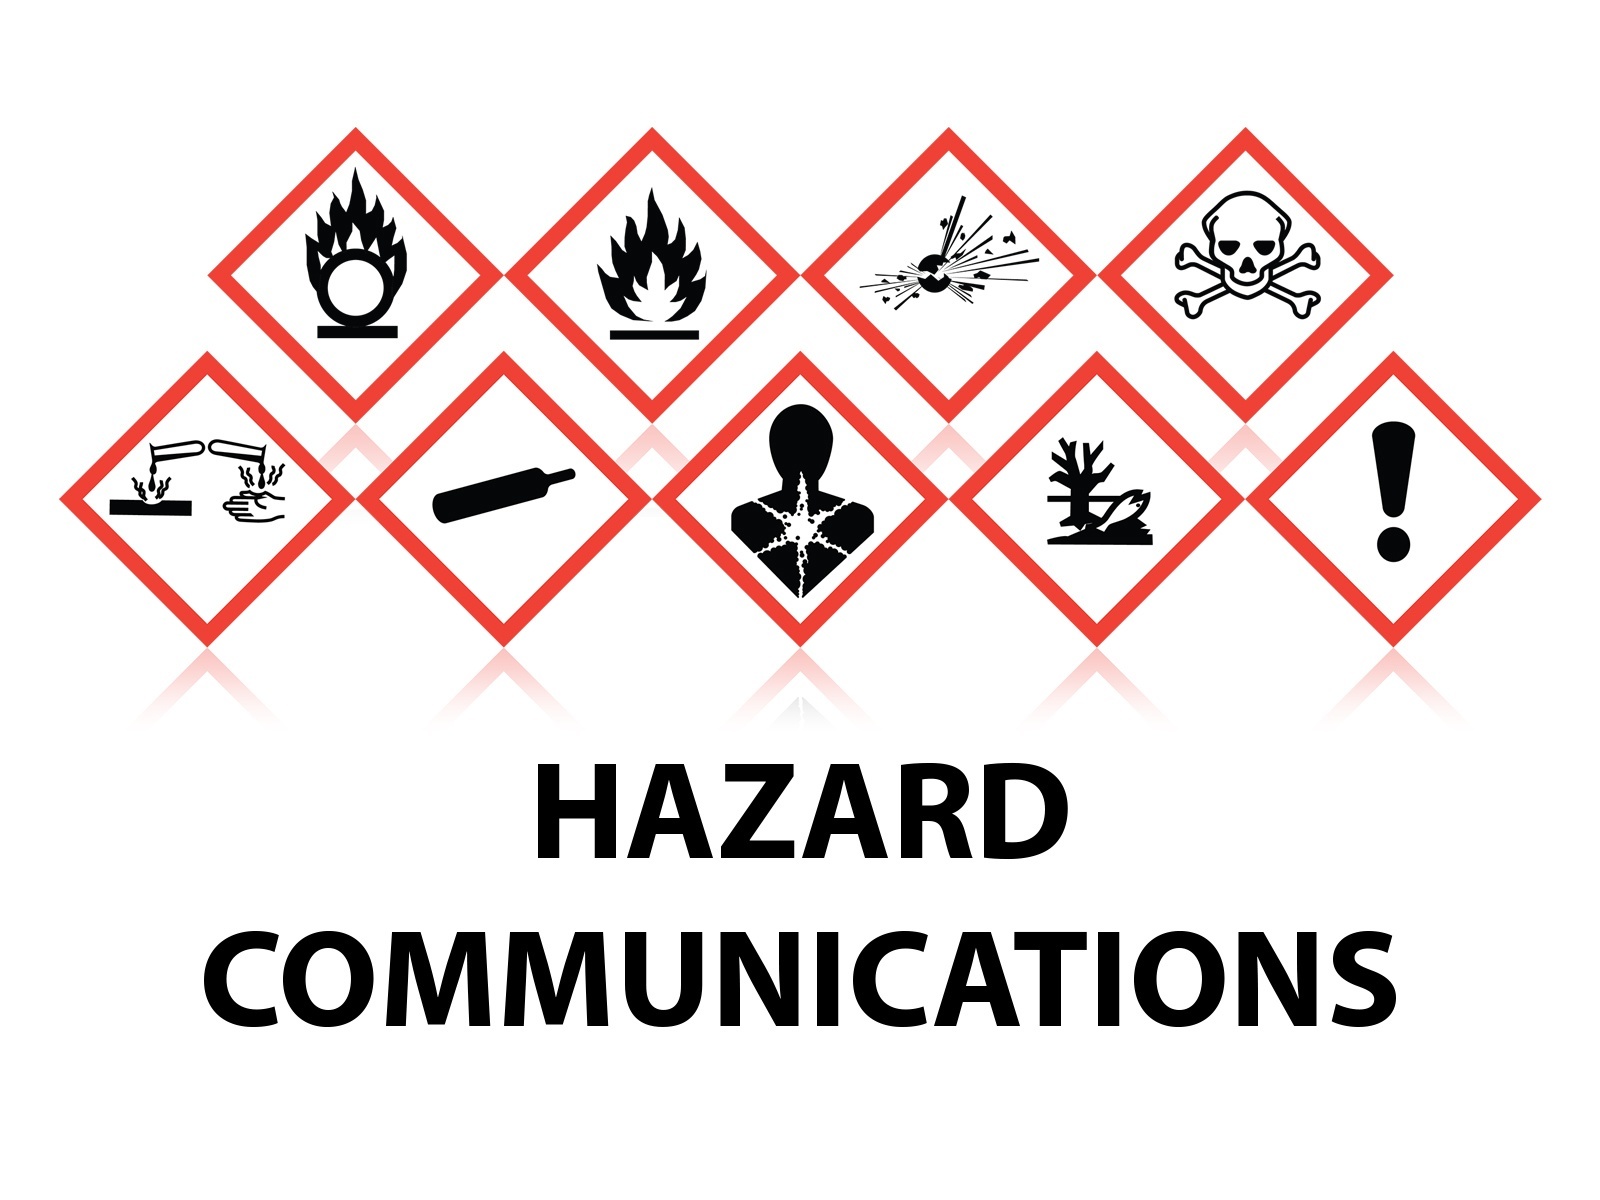 Is Your OSHA Safety Training Program Ready For The New Hazard Communication Standard